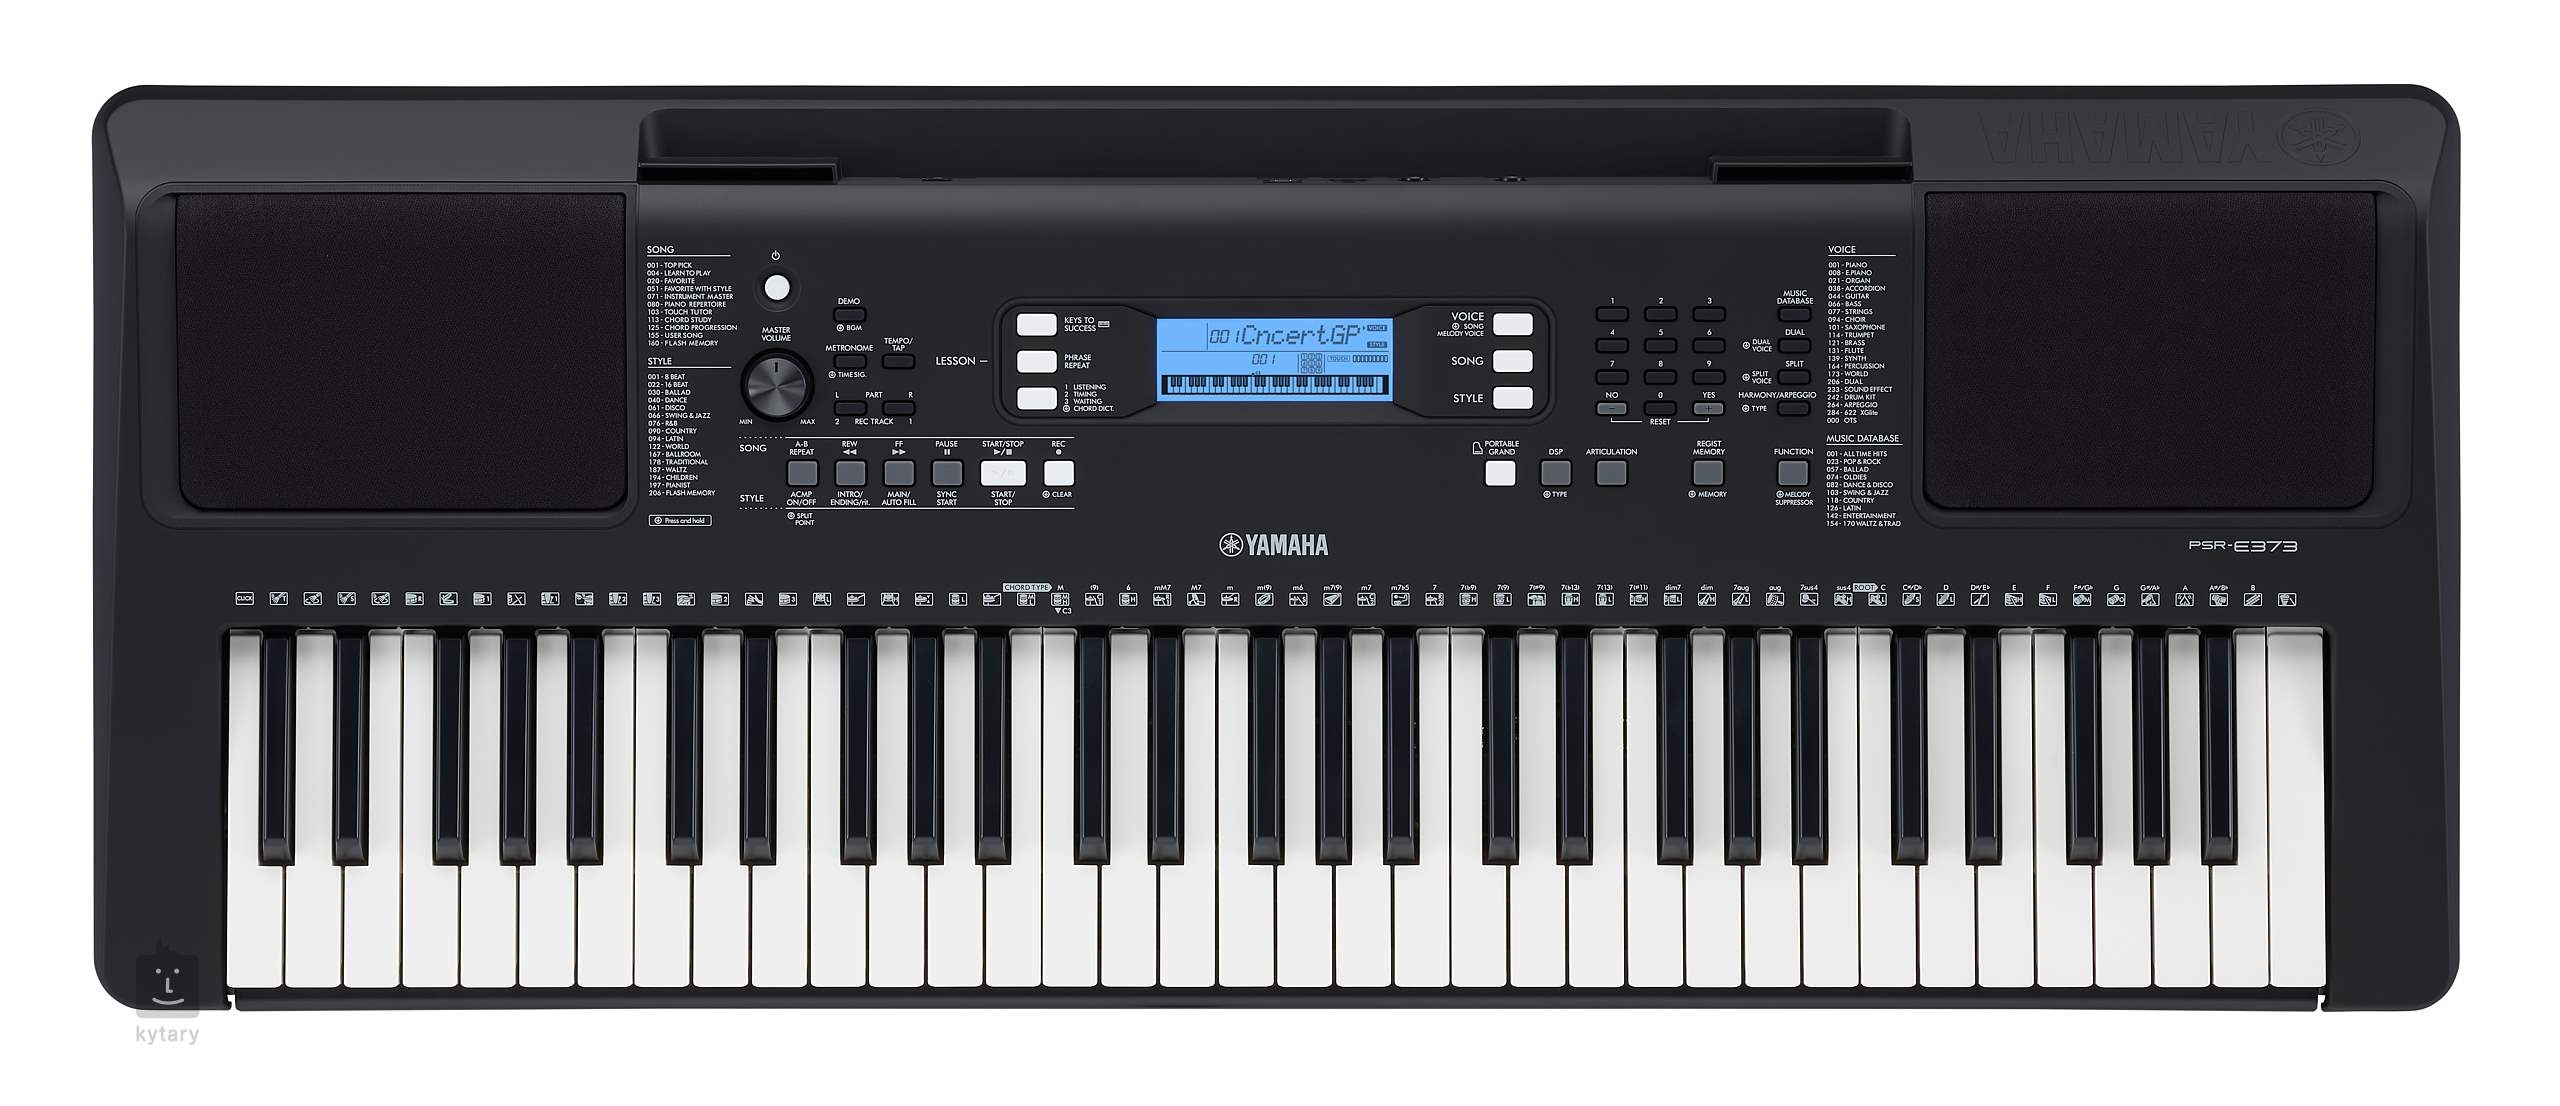 Tastiera digitale PSR-E373 Yamaha 